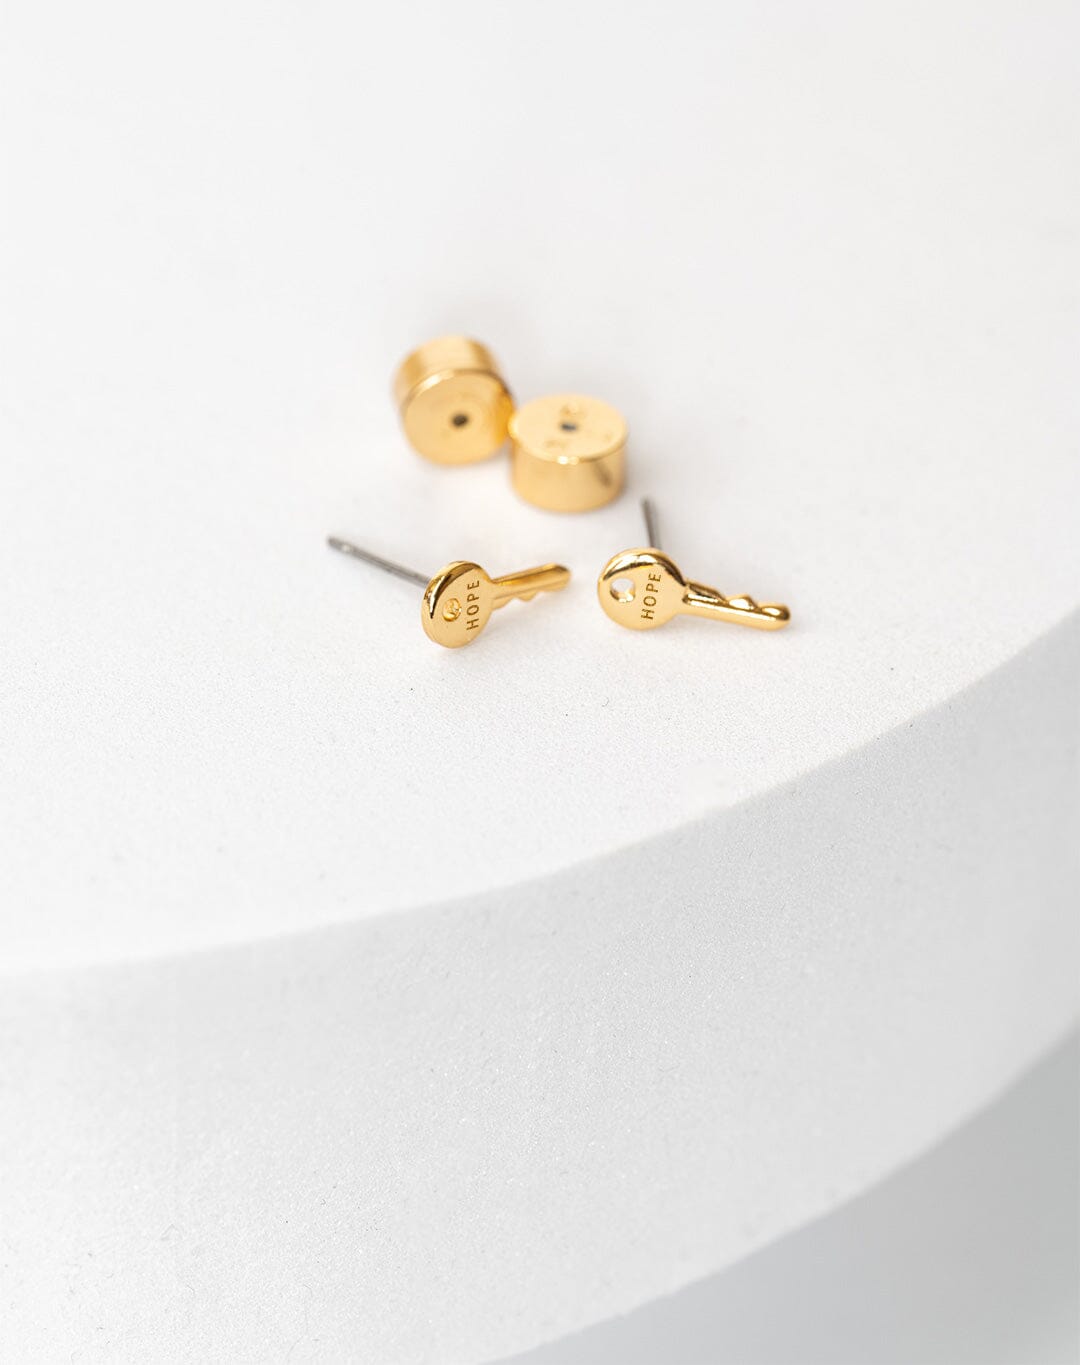 Mini Key Post Earrings Earrings The Giving Keys HOPE Gold 